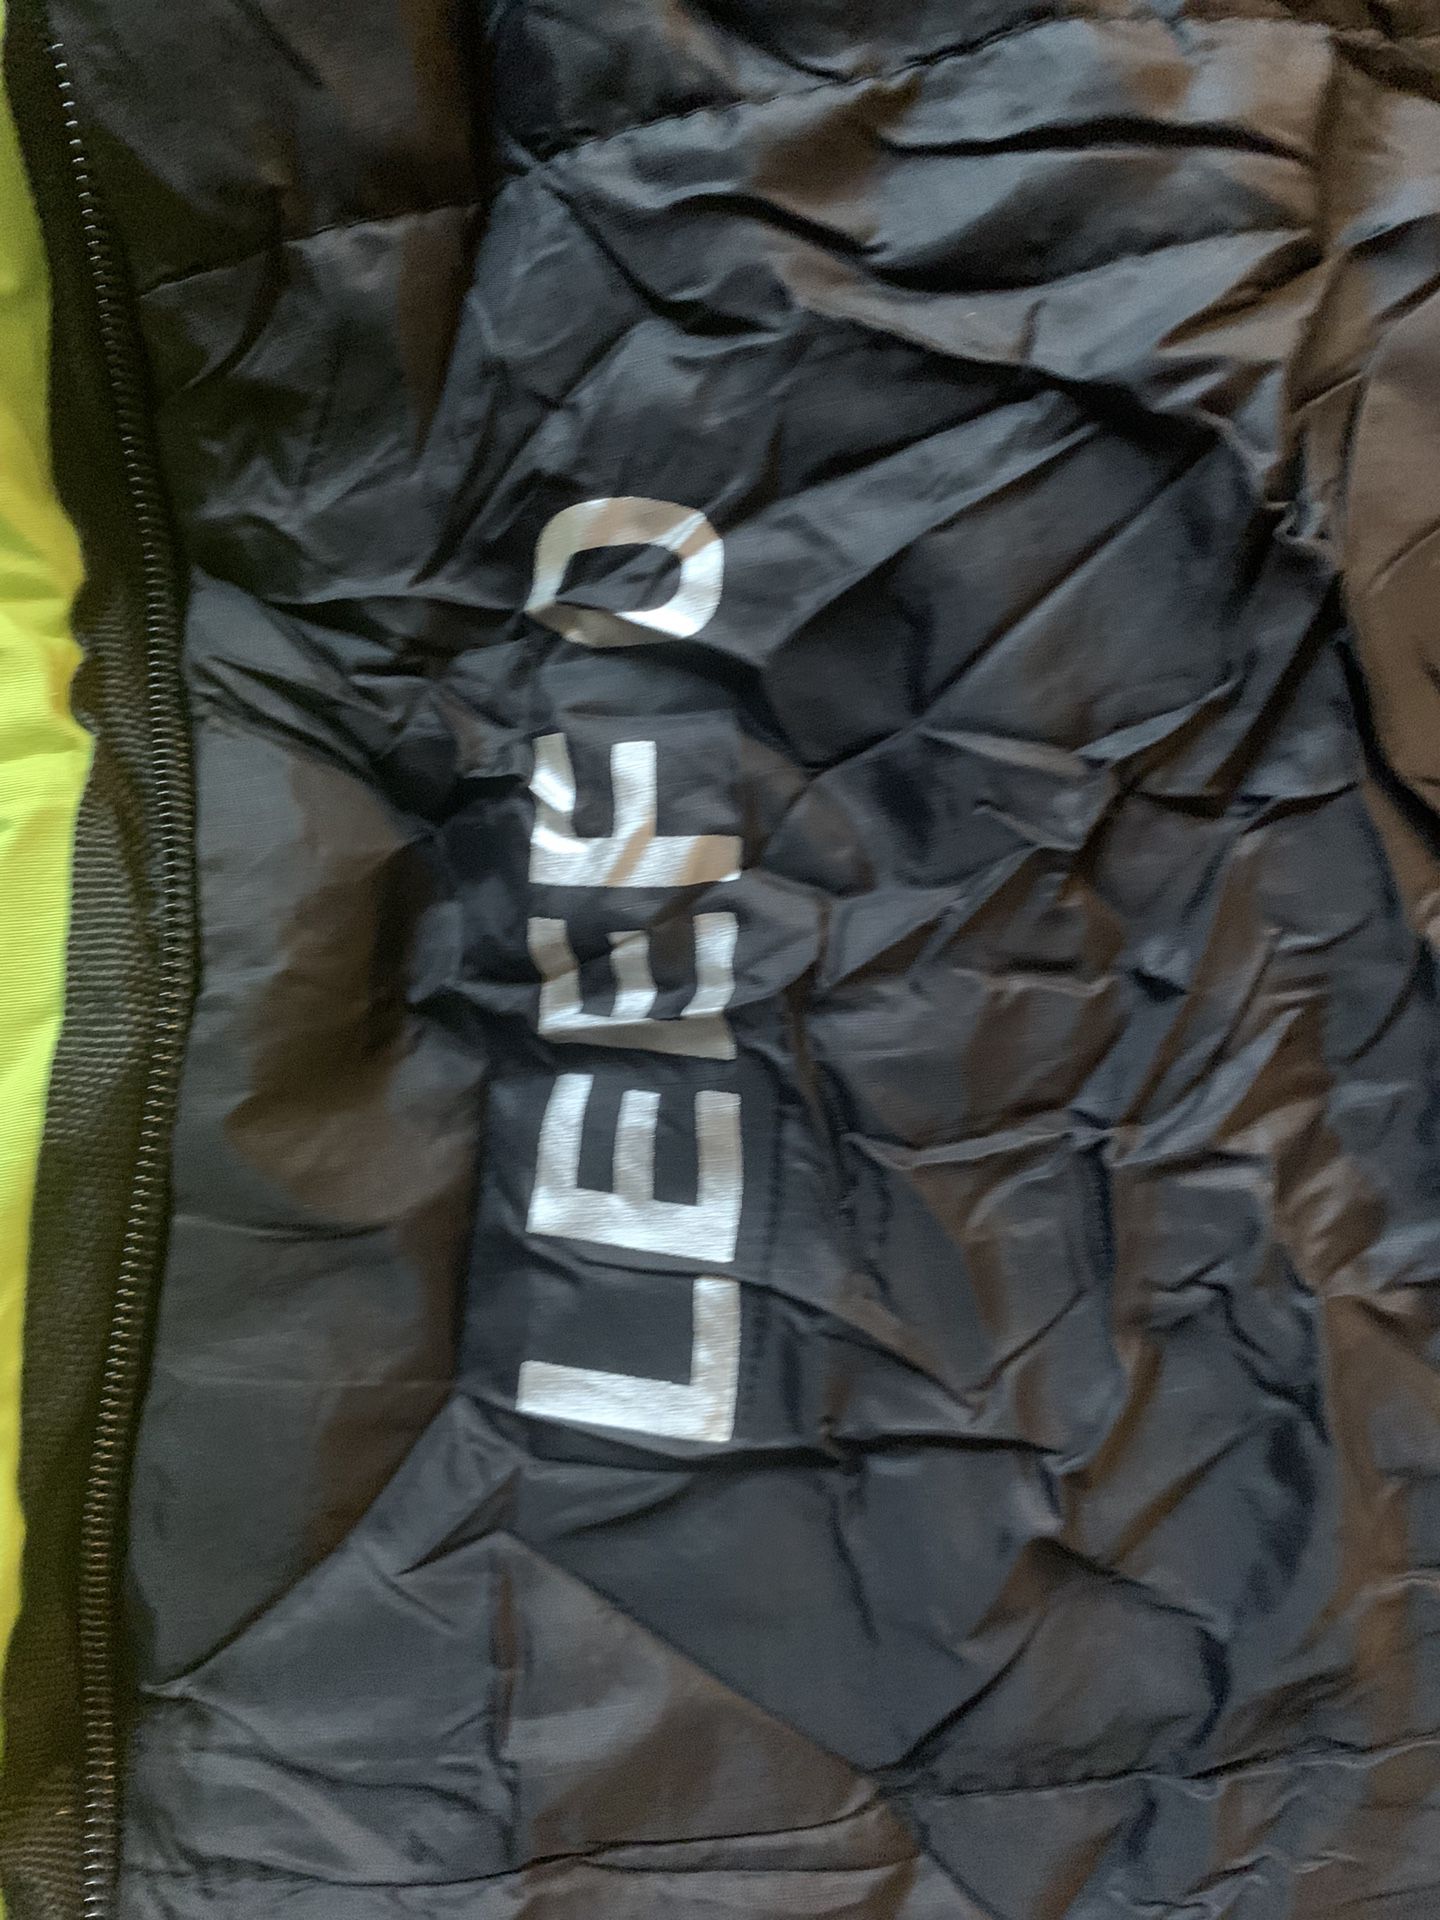 TETON Sports Leef 0 Mummy Sleeping Bag - Lightweight Sleeping Bag for Backpacking, Camping, etc